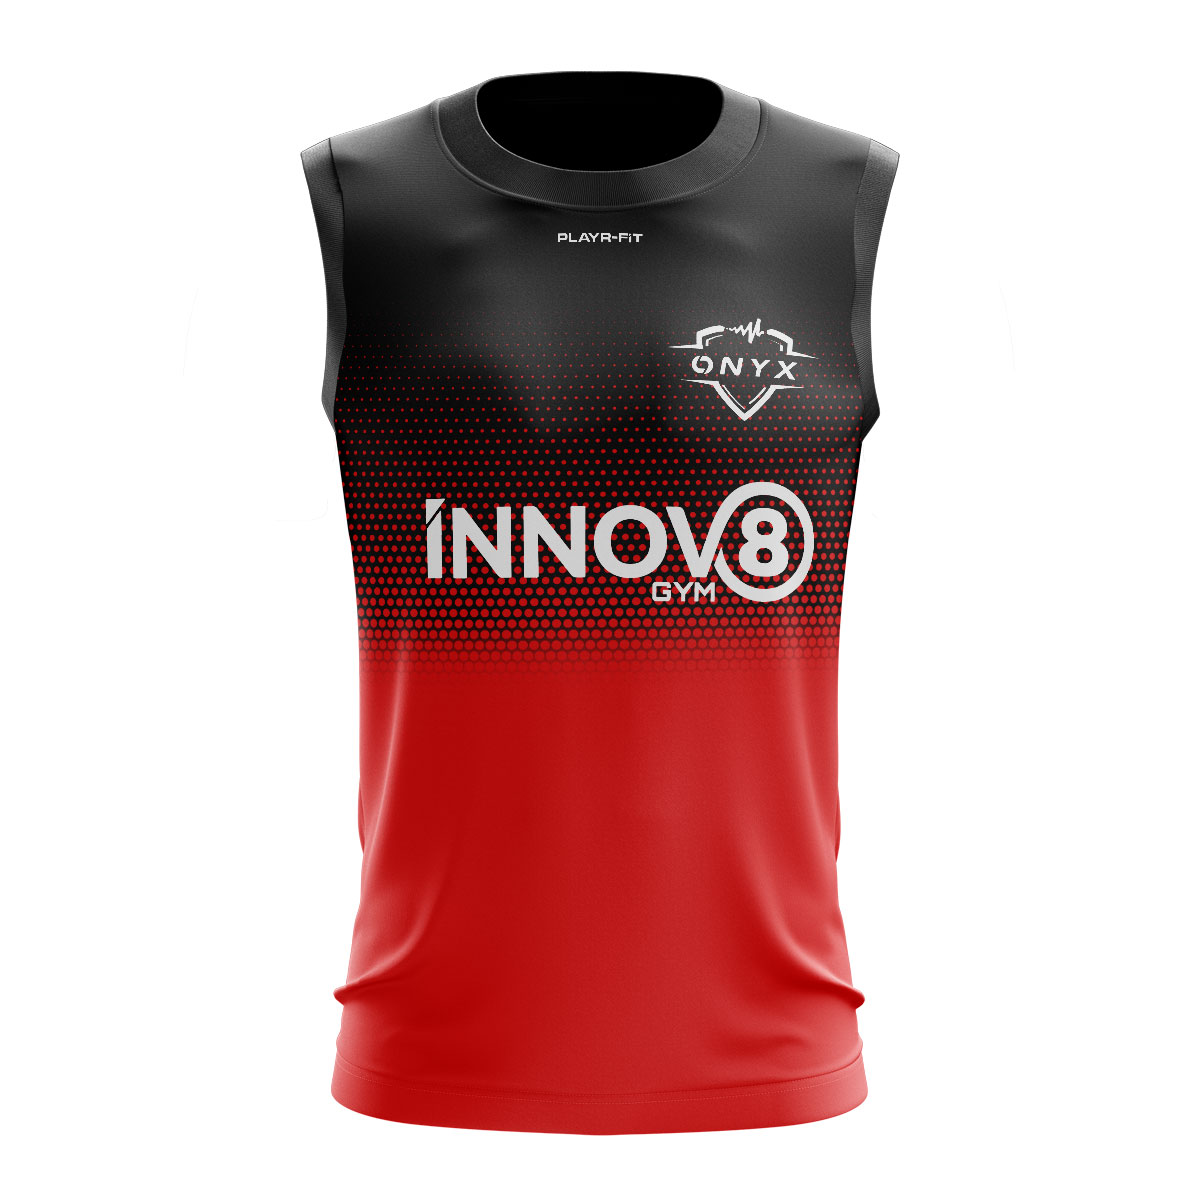 Innov8 Gym Women’s Vest - Red/Black - PLAYR-FIT - Ireland & UK